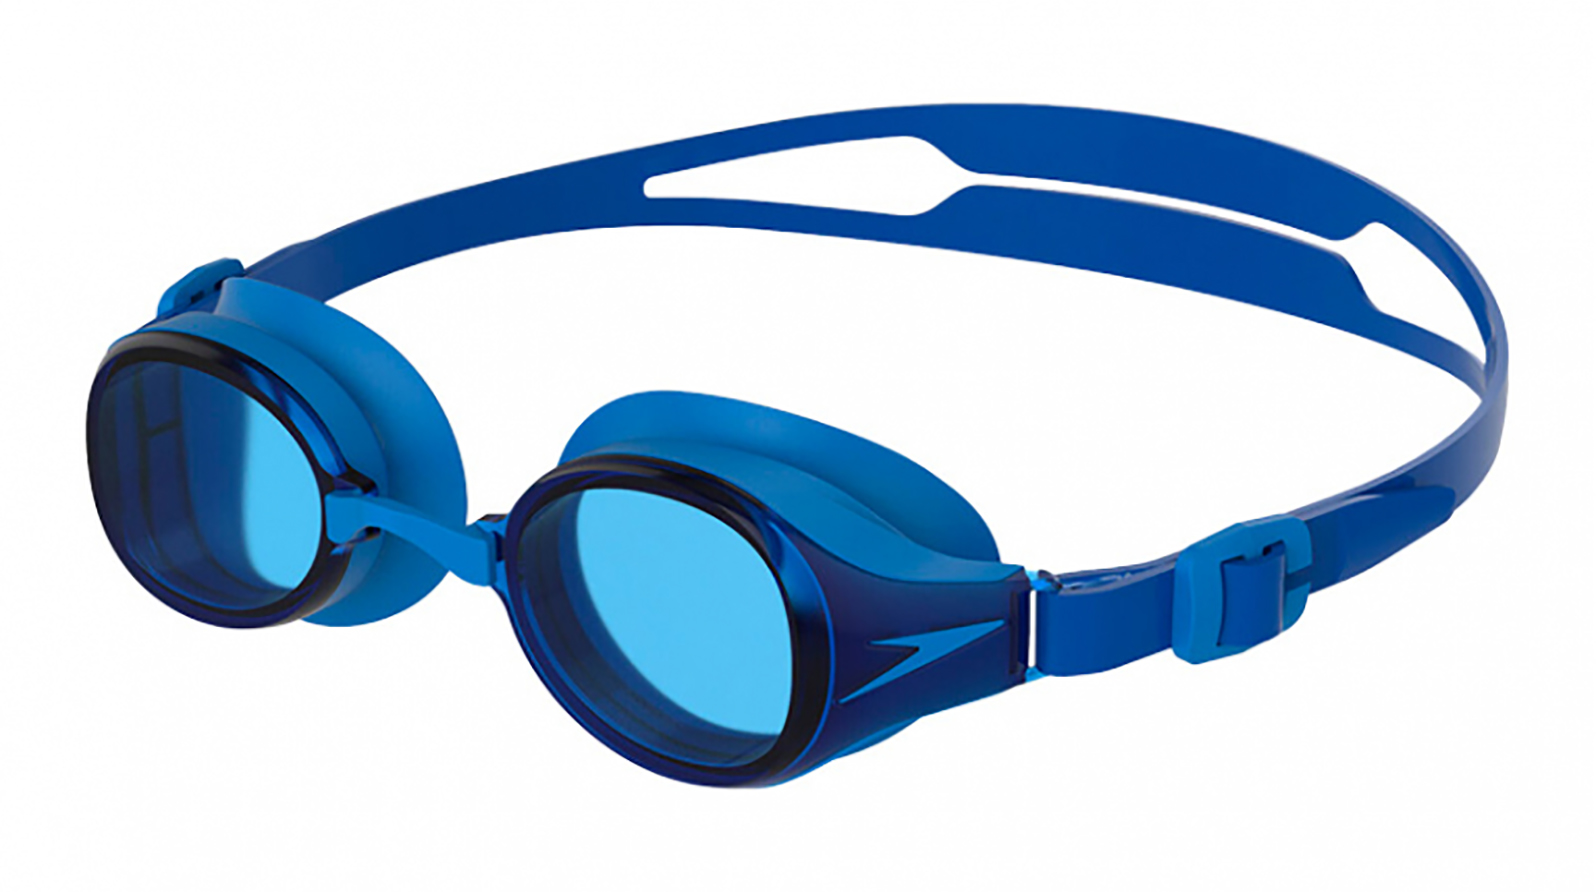 Speedo Очки для плавания Hydropure Optical F809 -4.0 speedo очки для плавания hydropure optical f809 4 0